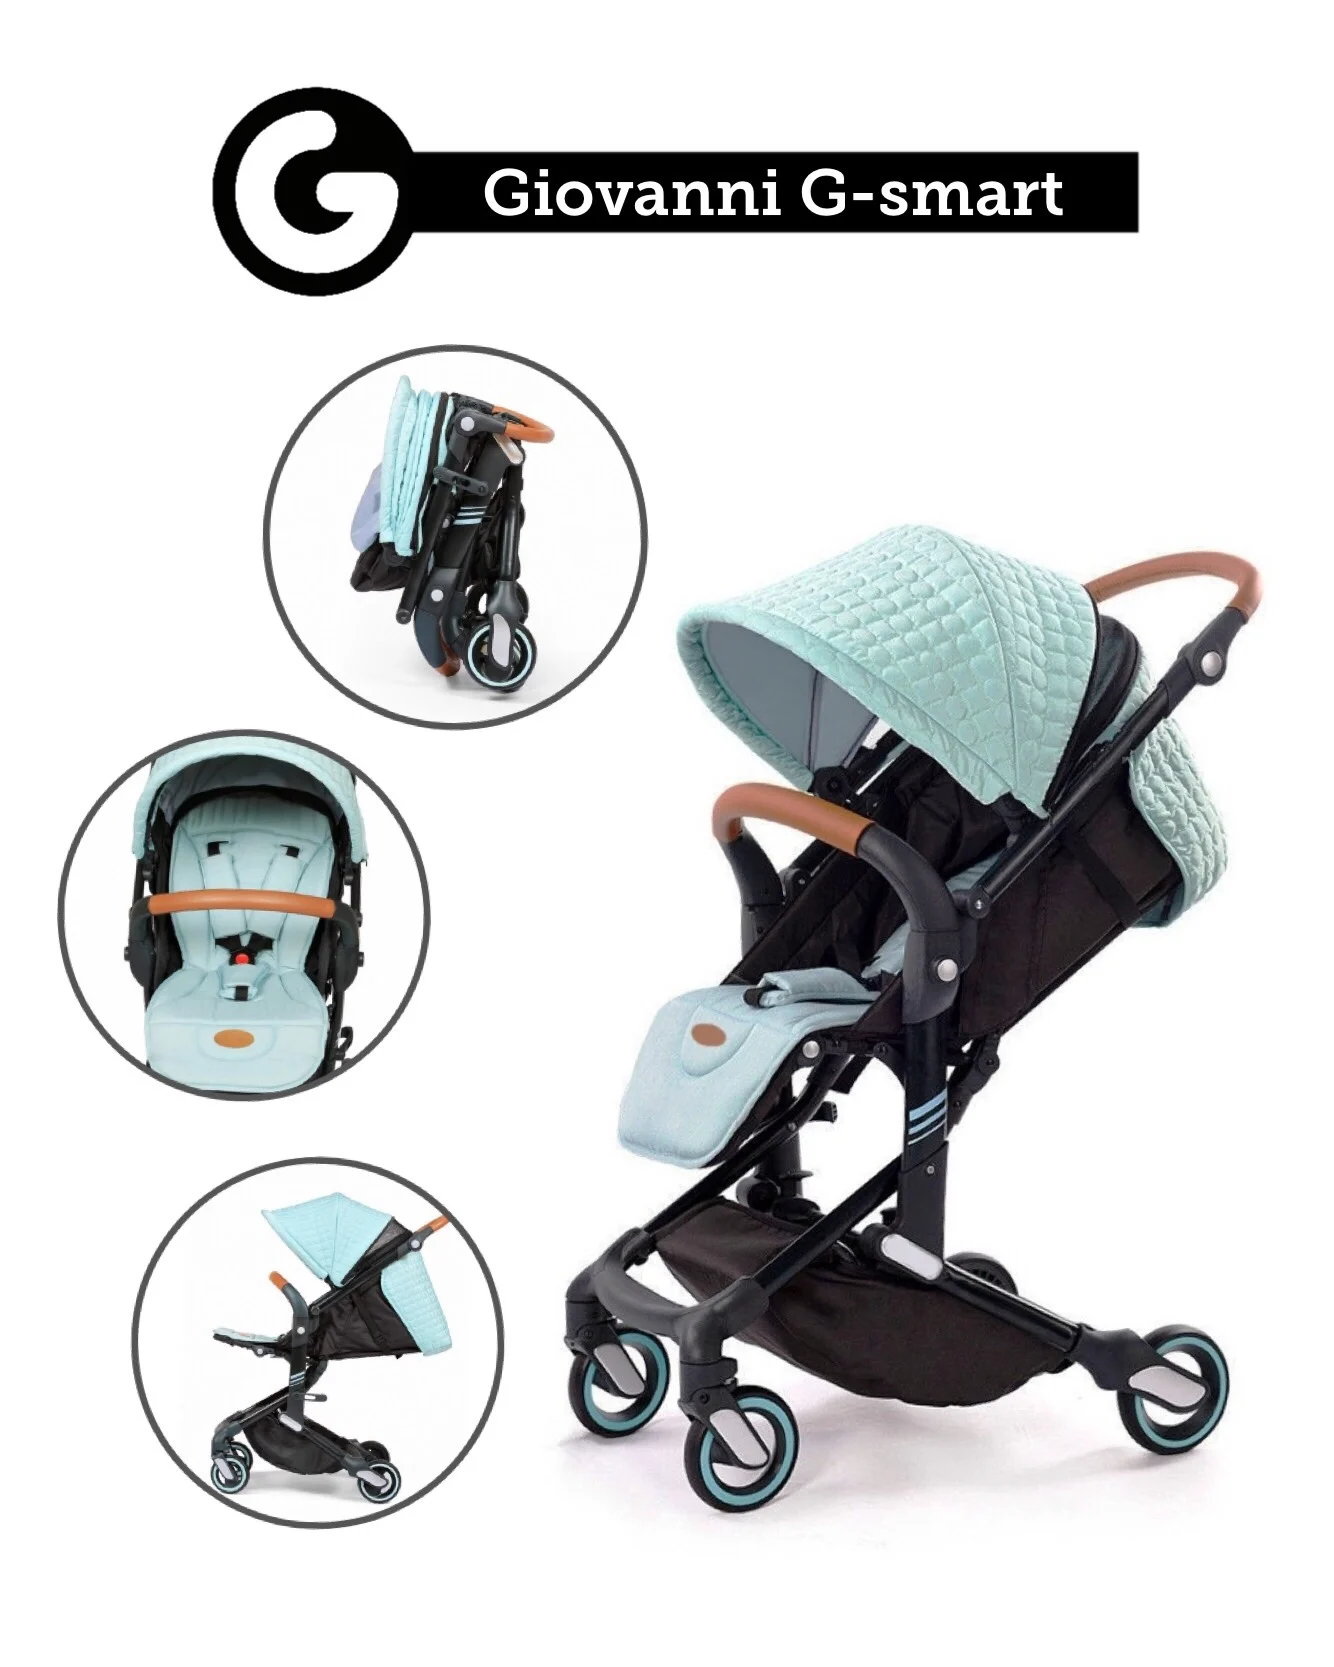 Stroller Giovanni G-smart Oliva